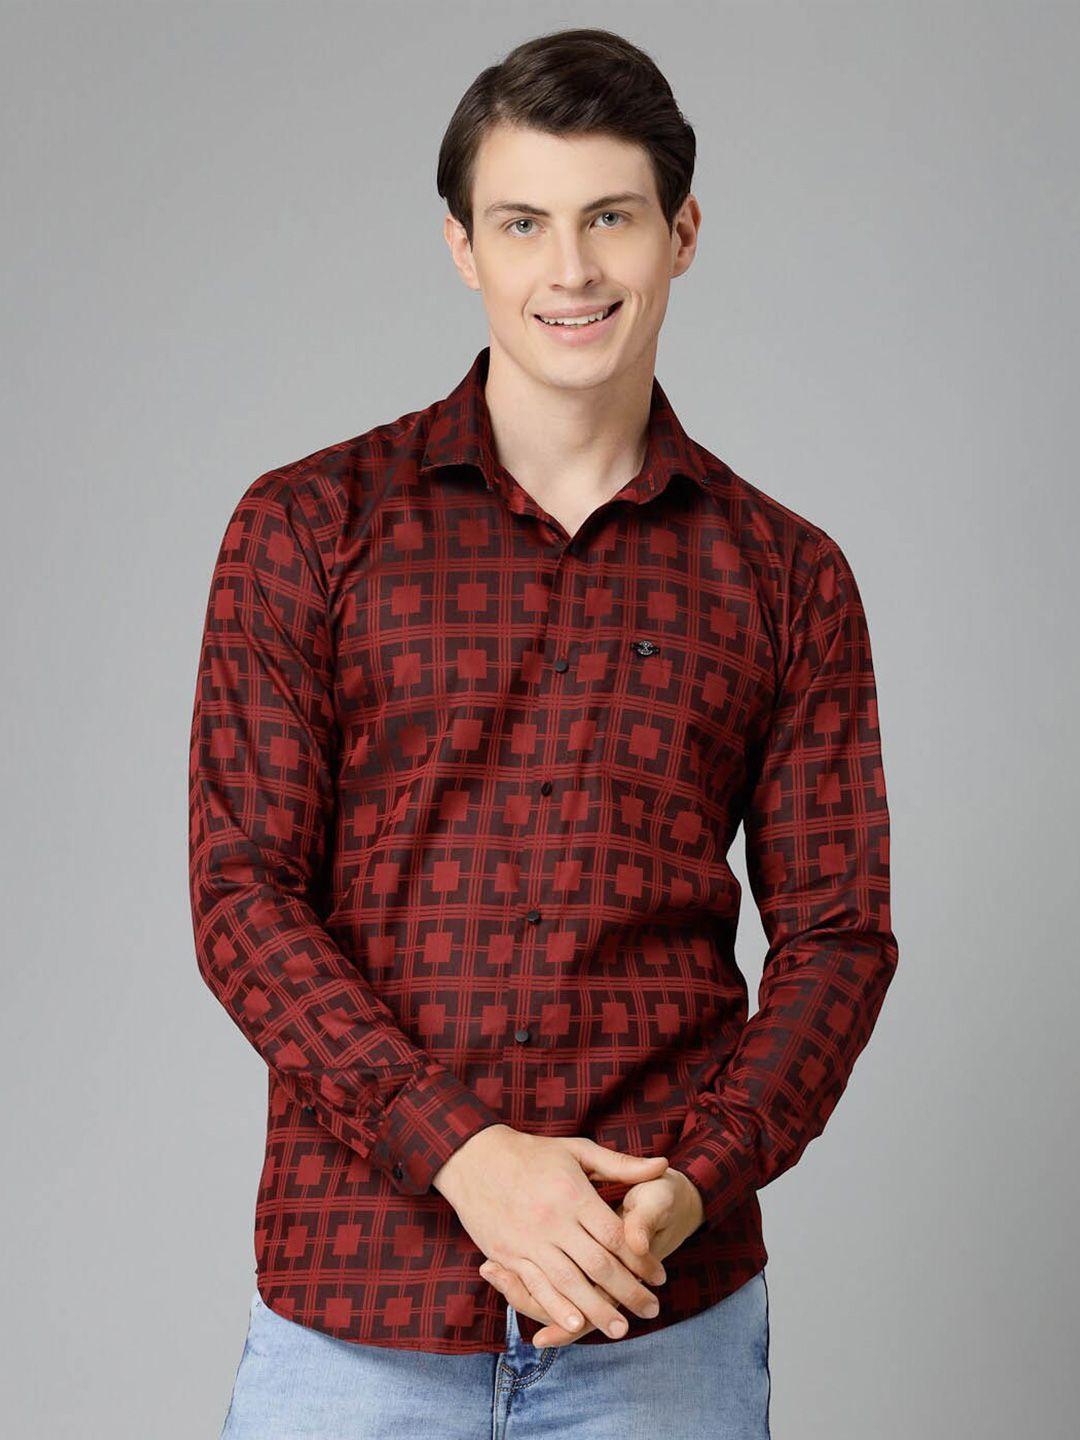 jadeberry standard geometric printed cotton casual shirt